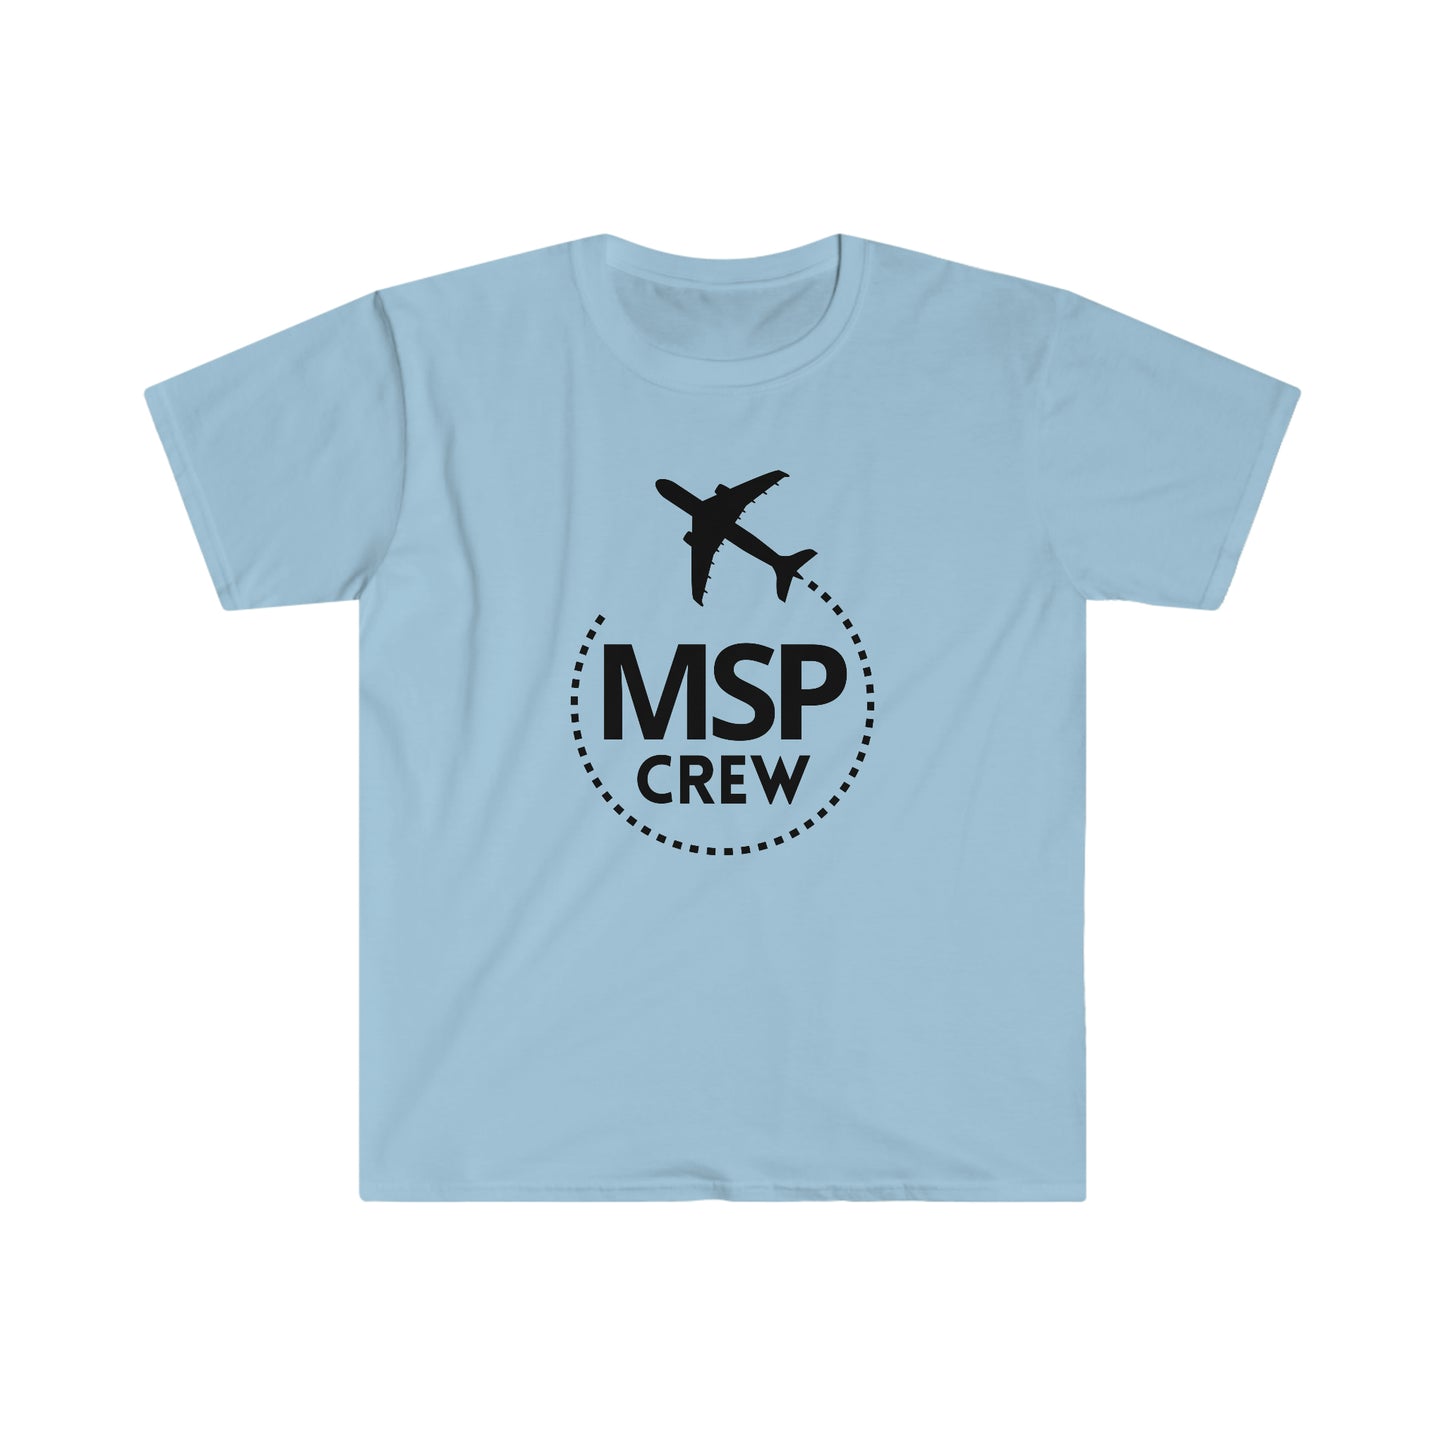 Minneapolis St. Paul MSP Airport Swag Aviation & Travel T-Shirt